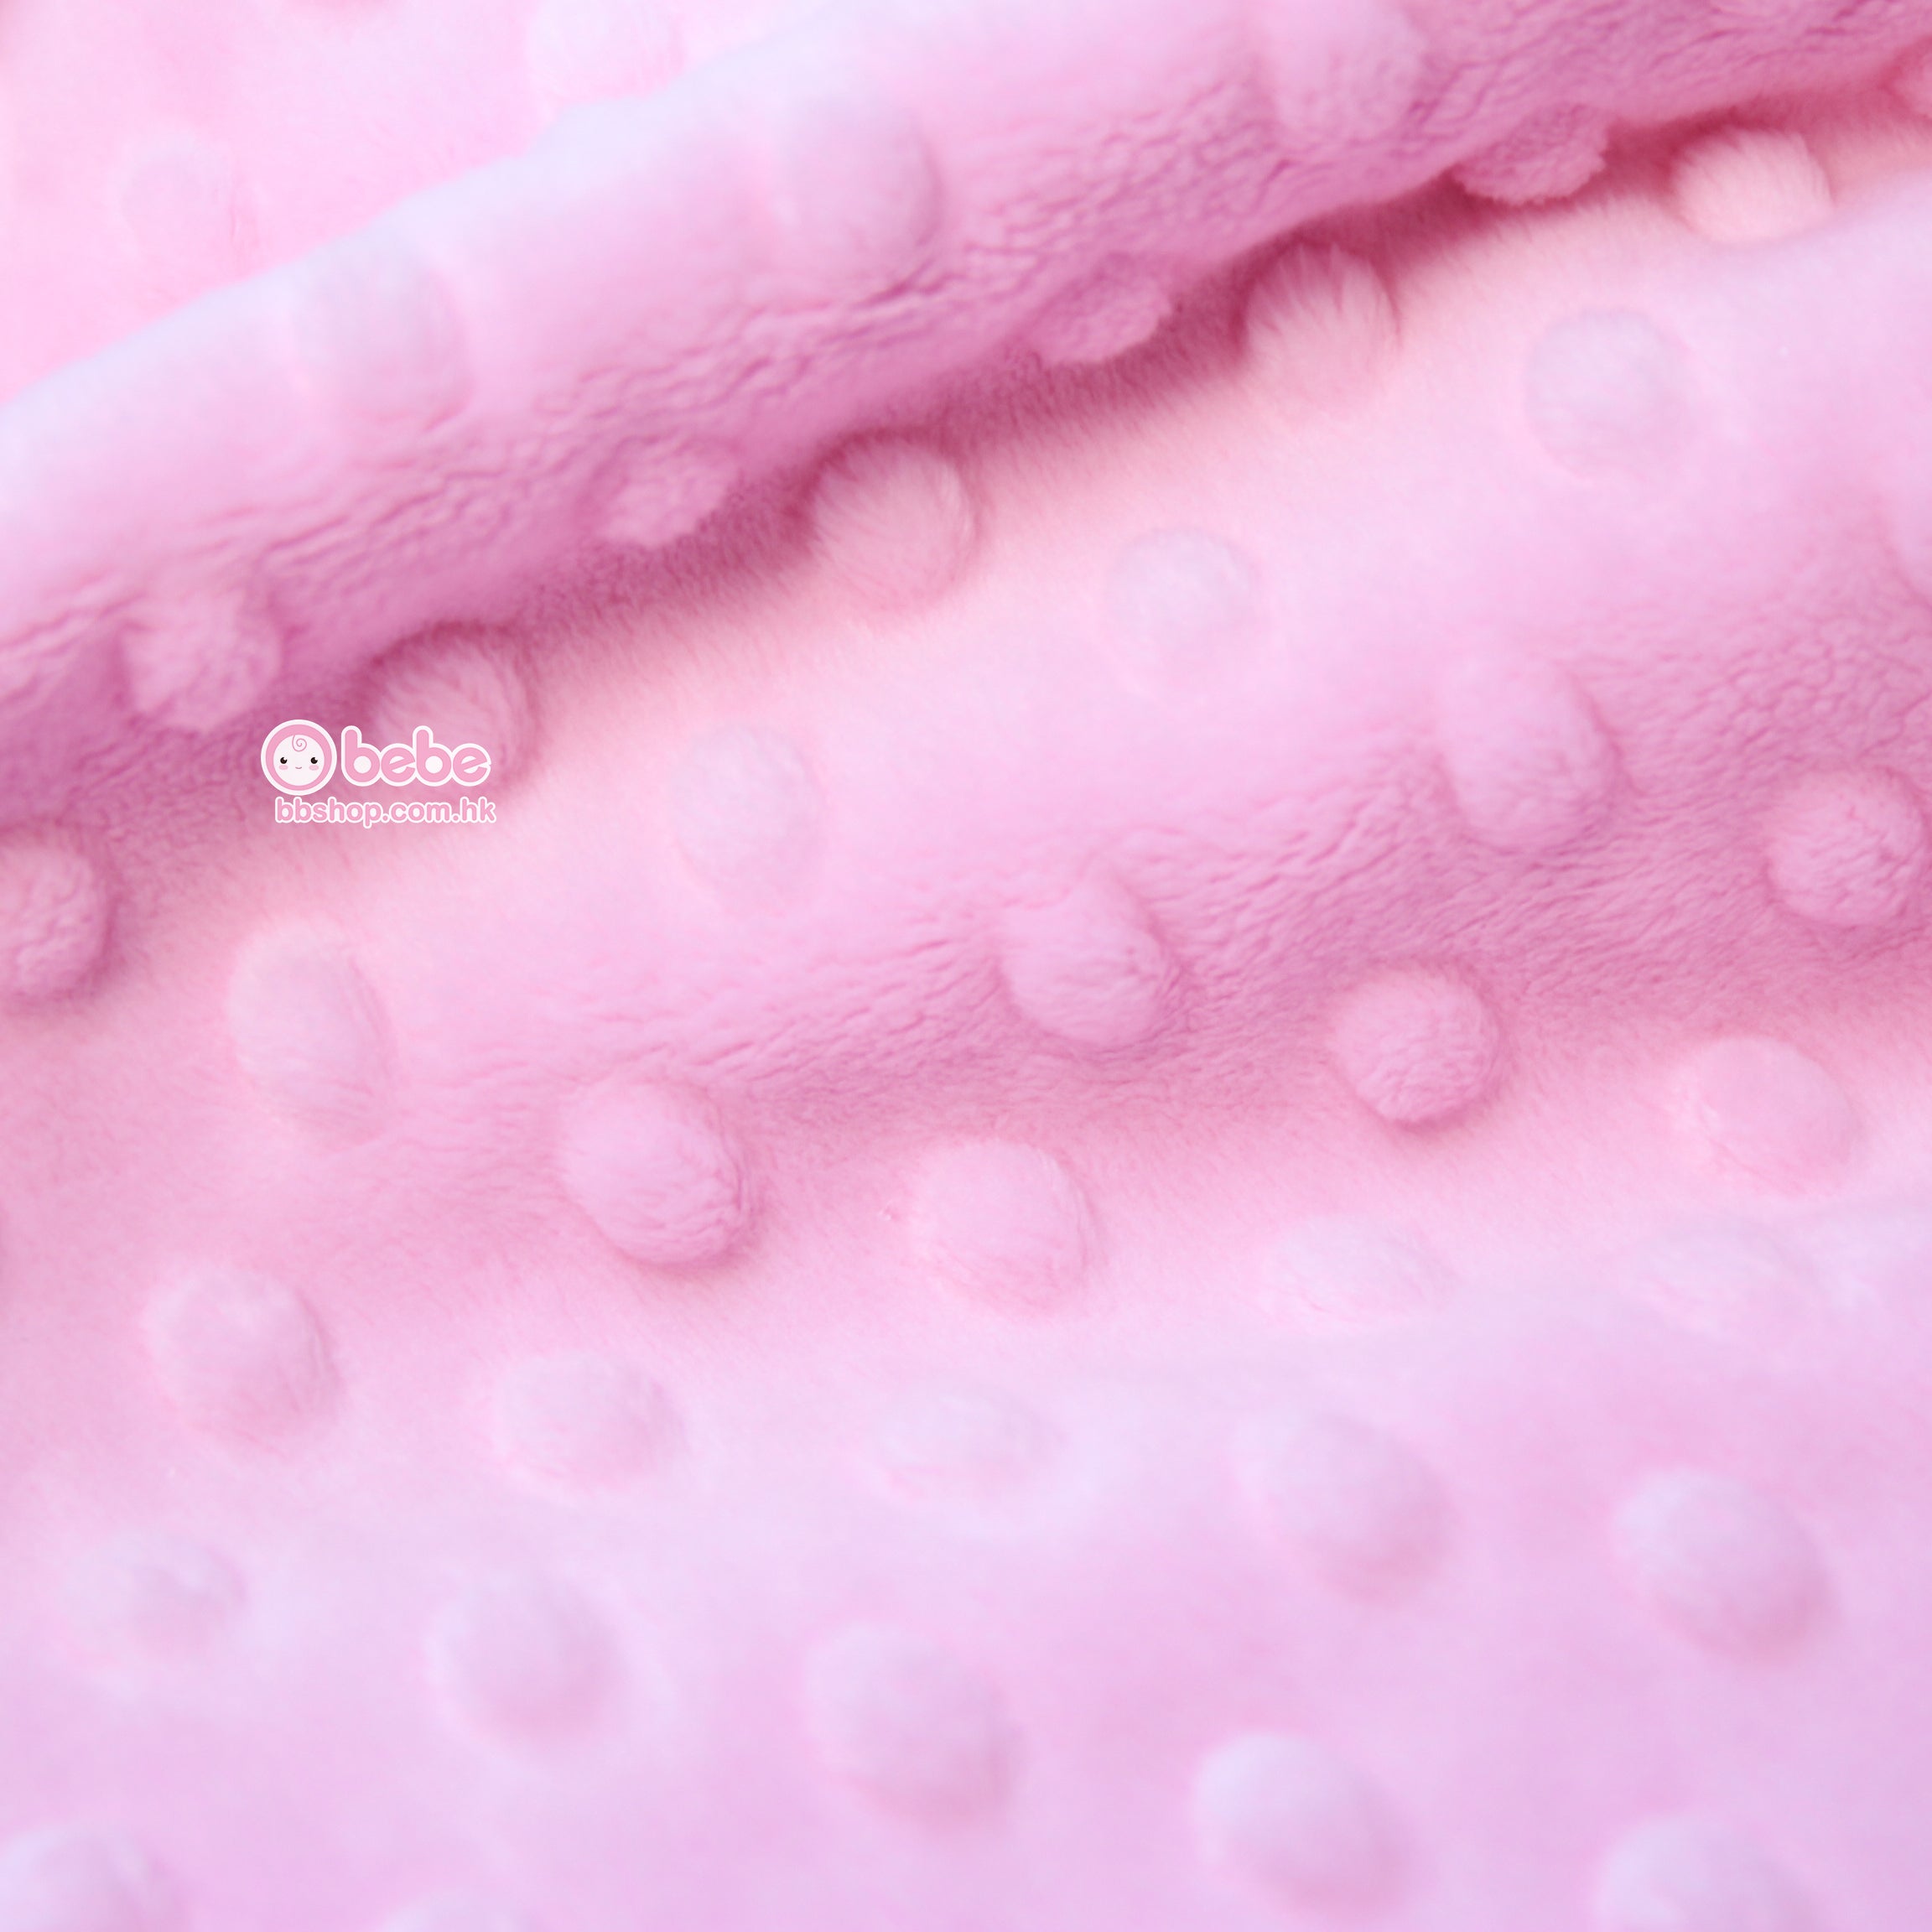 HMC102 自選拼布繡名小童被（110cm x 140cm）Customized Fabric Personalized Children's Blanket